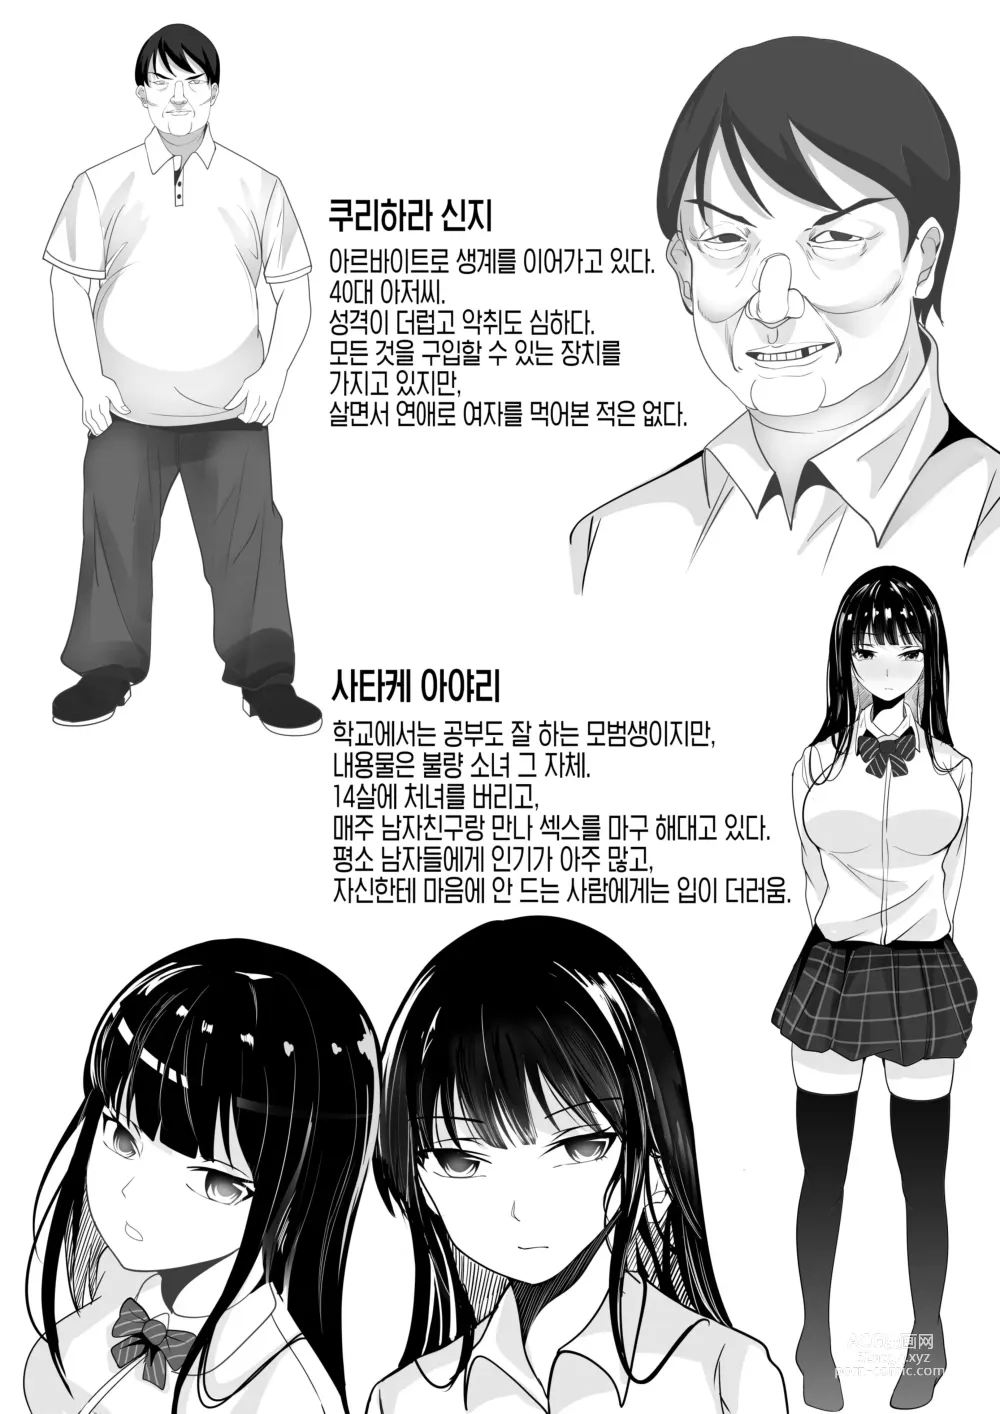 Page 3 of doujinshi 자동상품화 POS 리더기 신경 쓰이는 저 아이도 1만엔